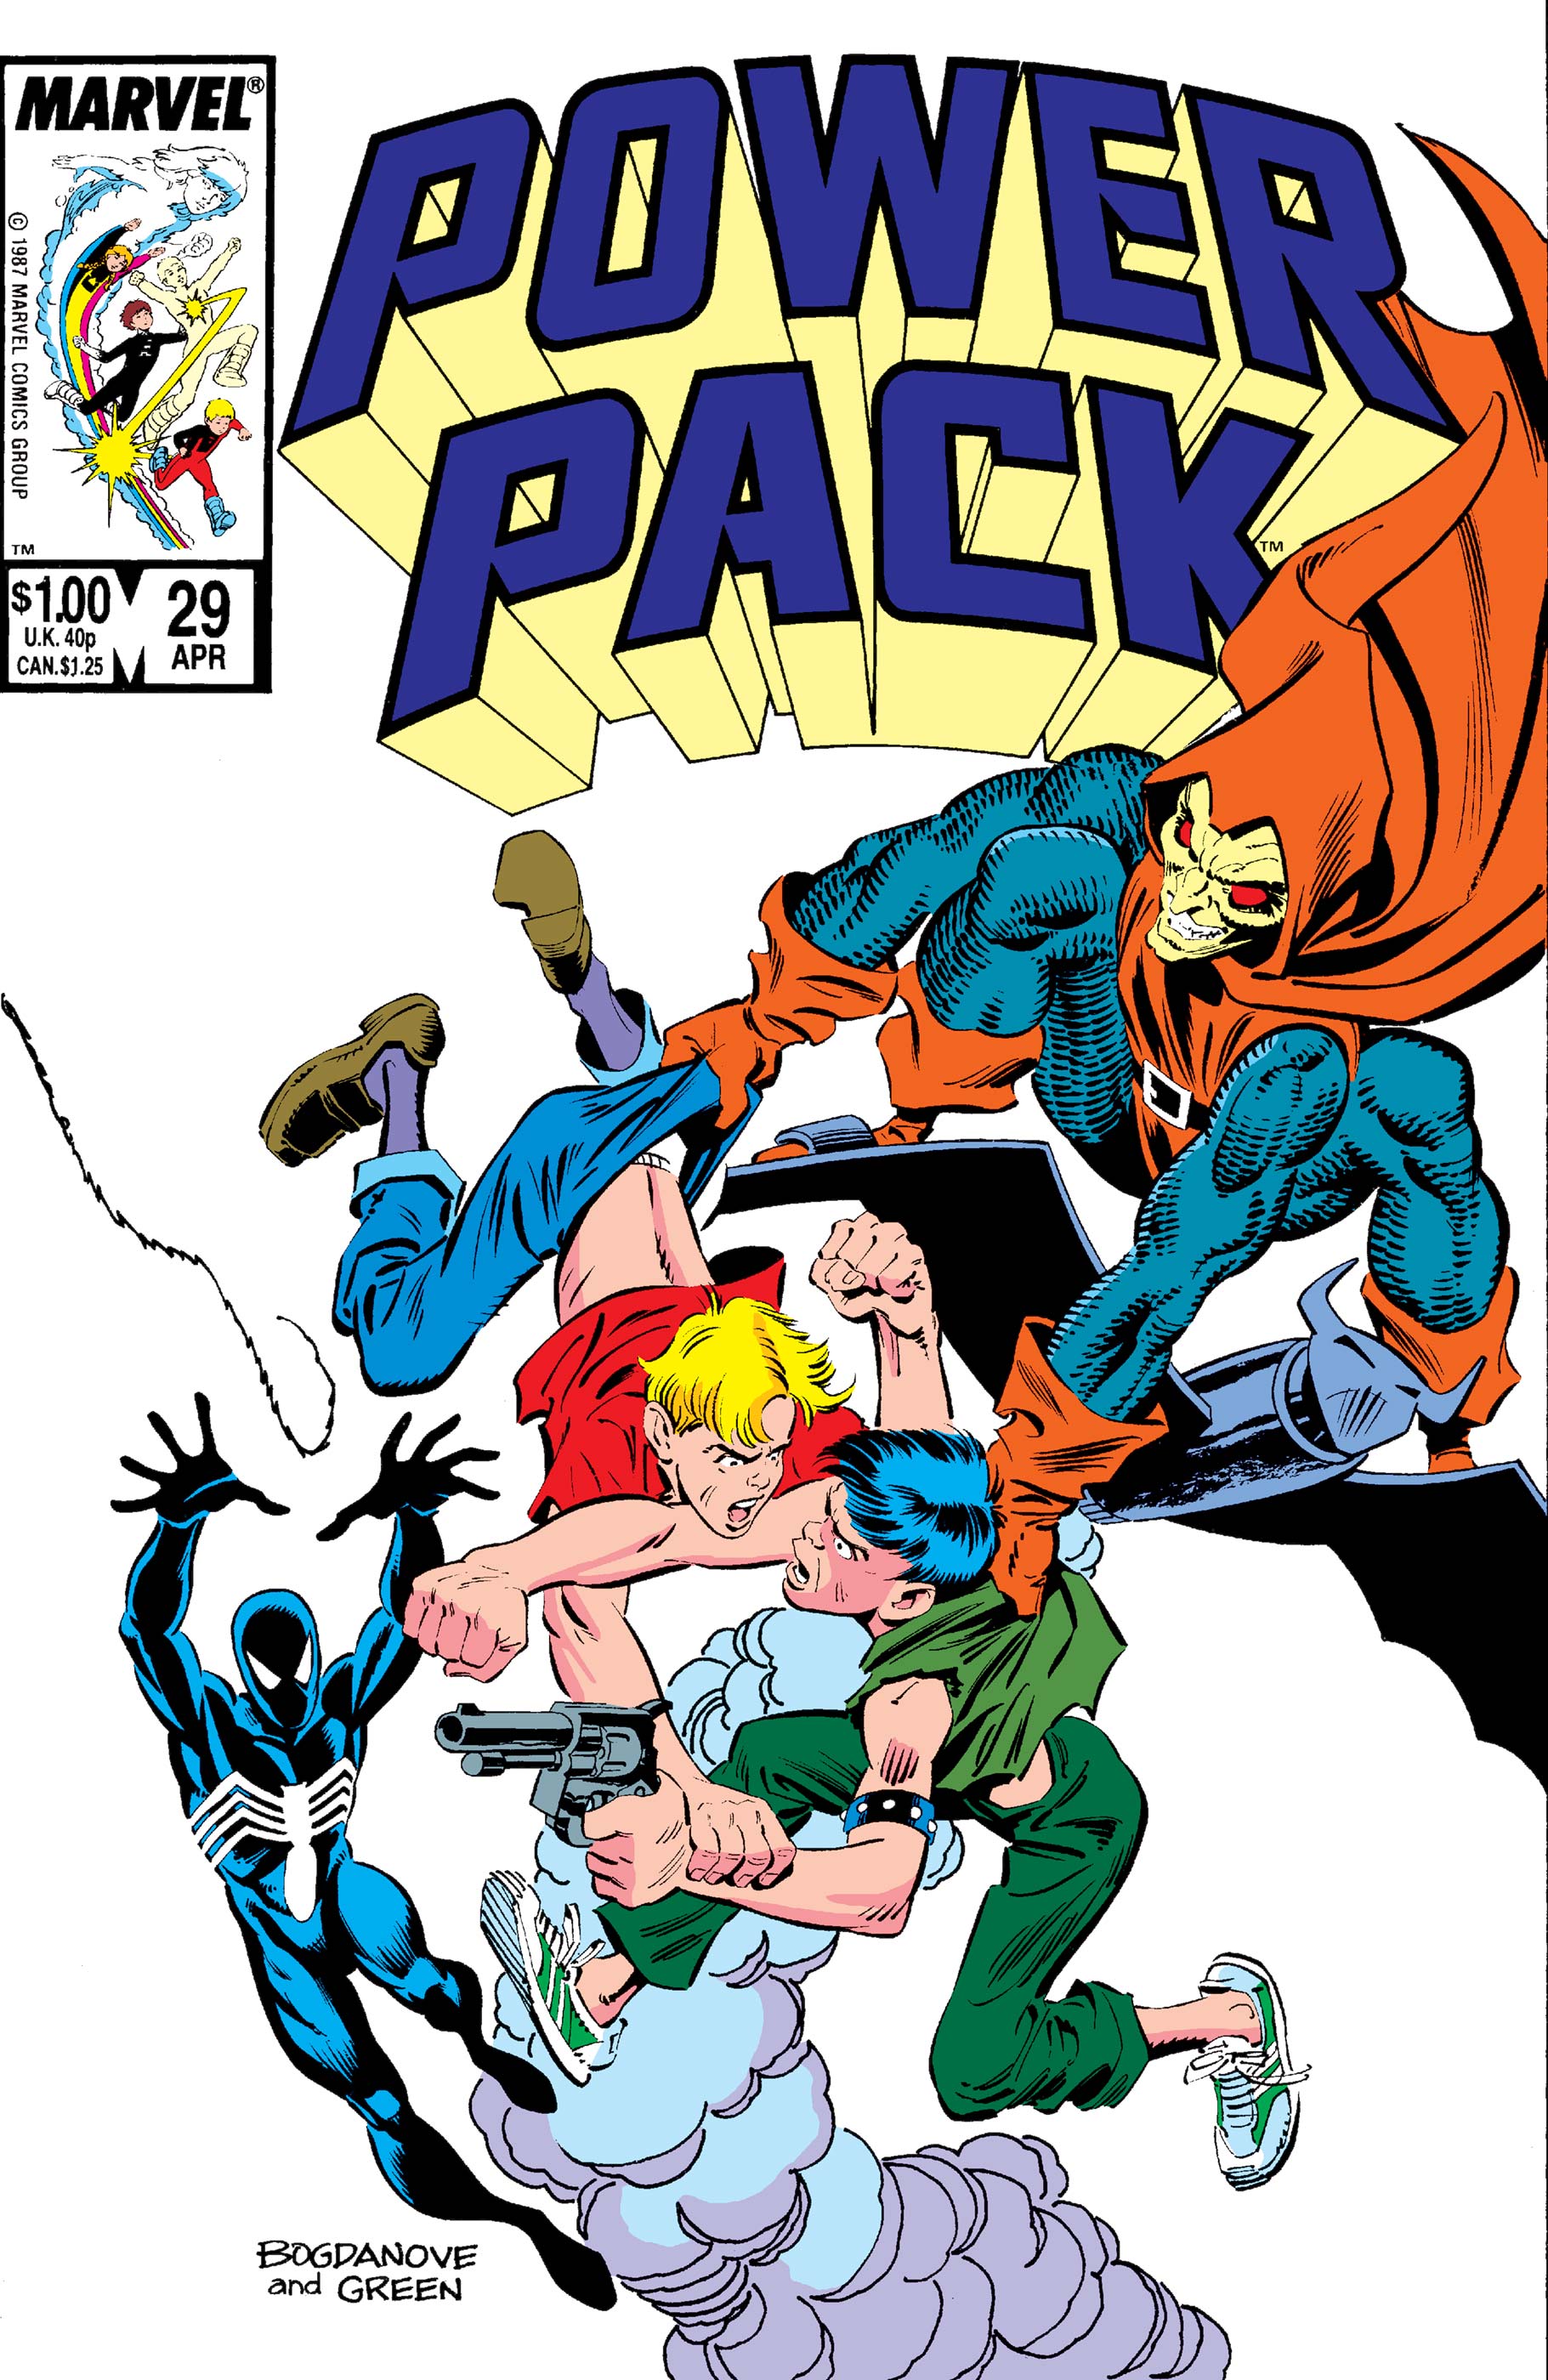 Power packing комиксы. Power Pack комикс. Пауэр читает. Energy Pack комикс.